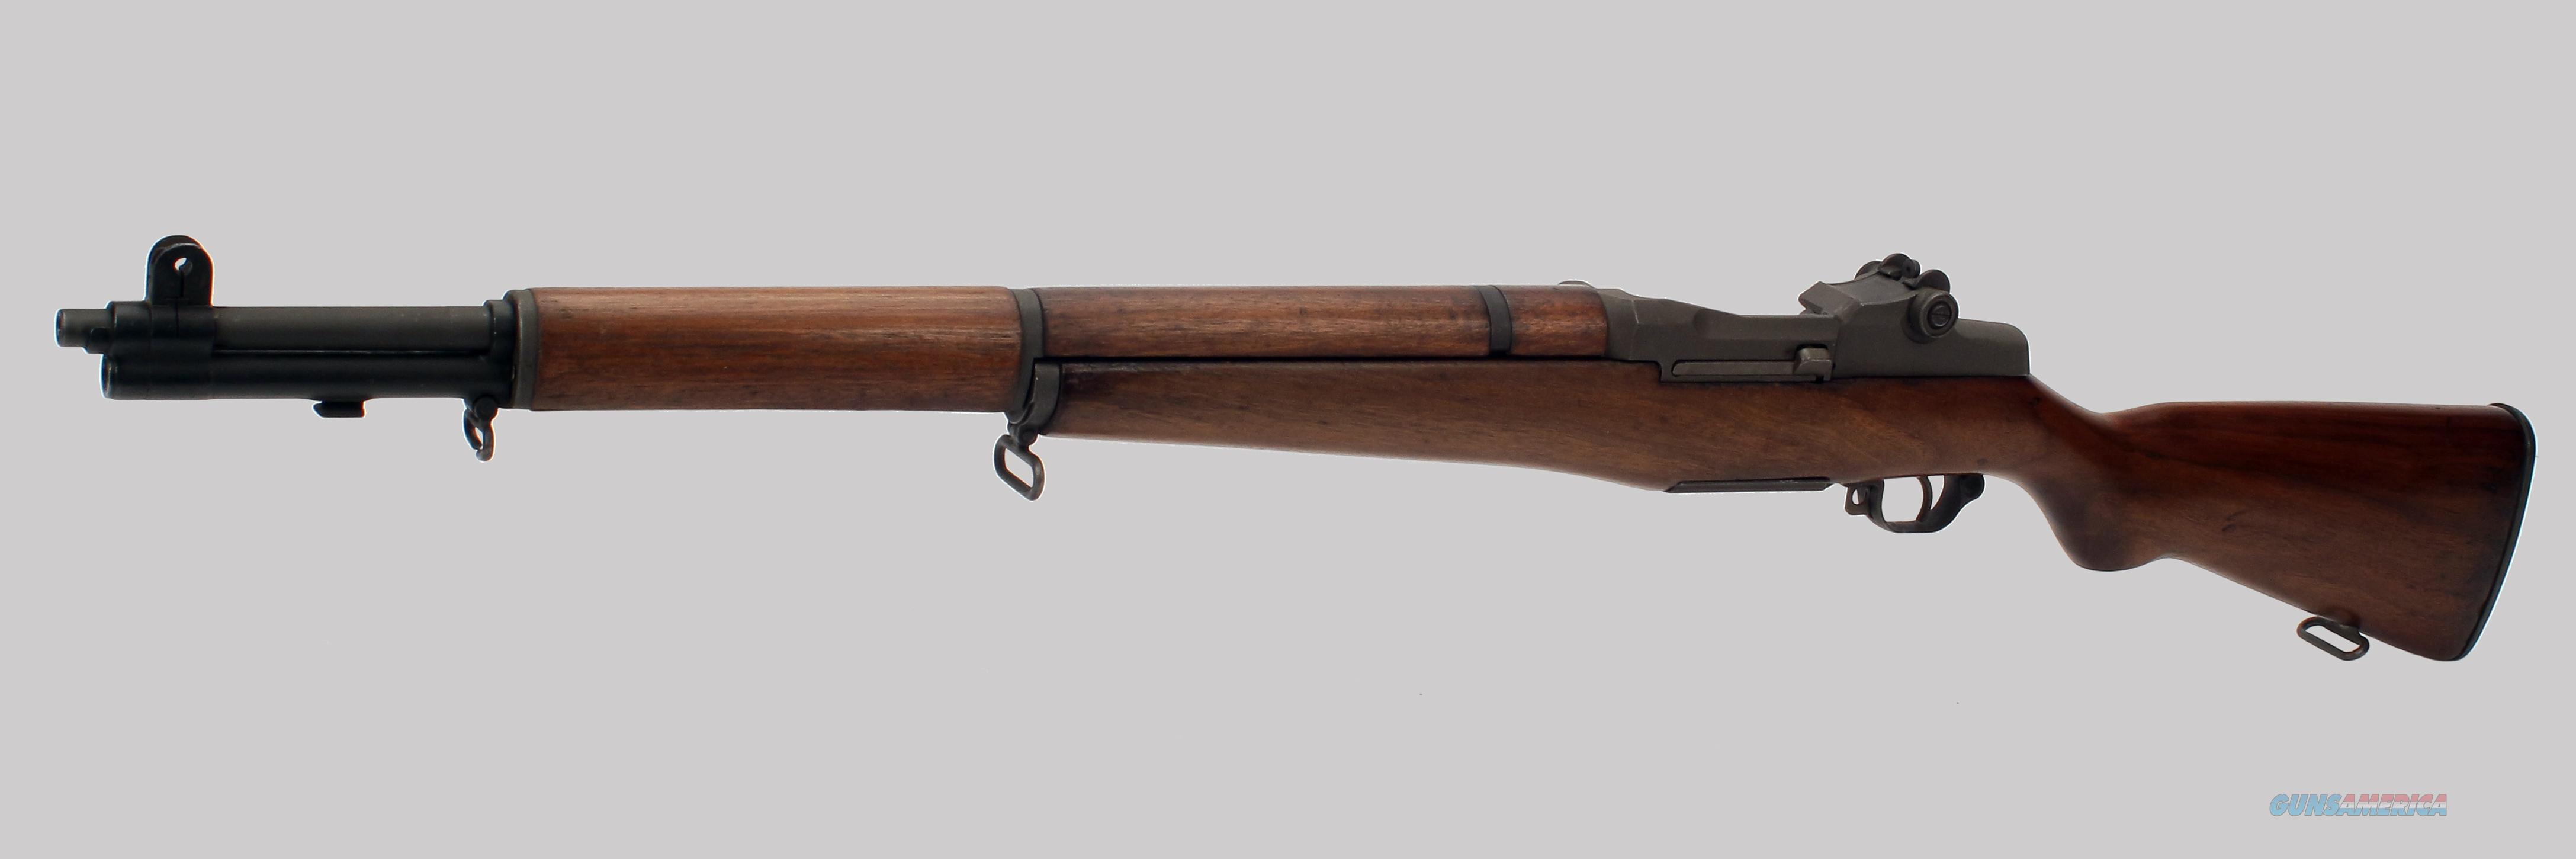 Springfield M1 Garand Rifle For Sale. 